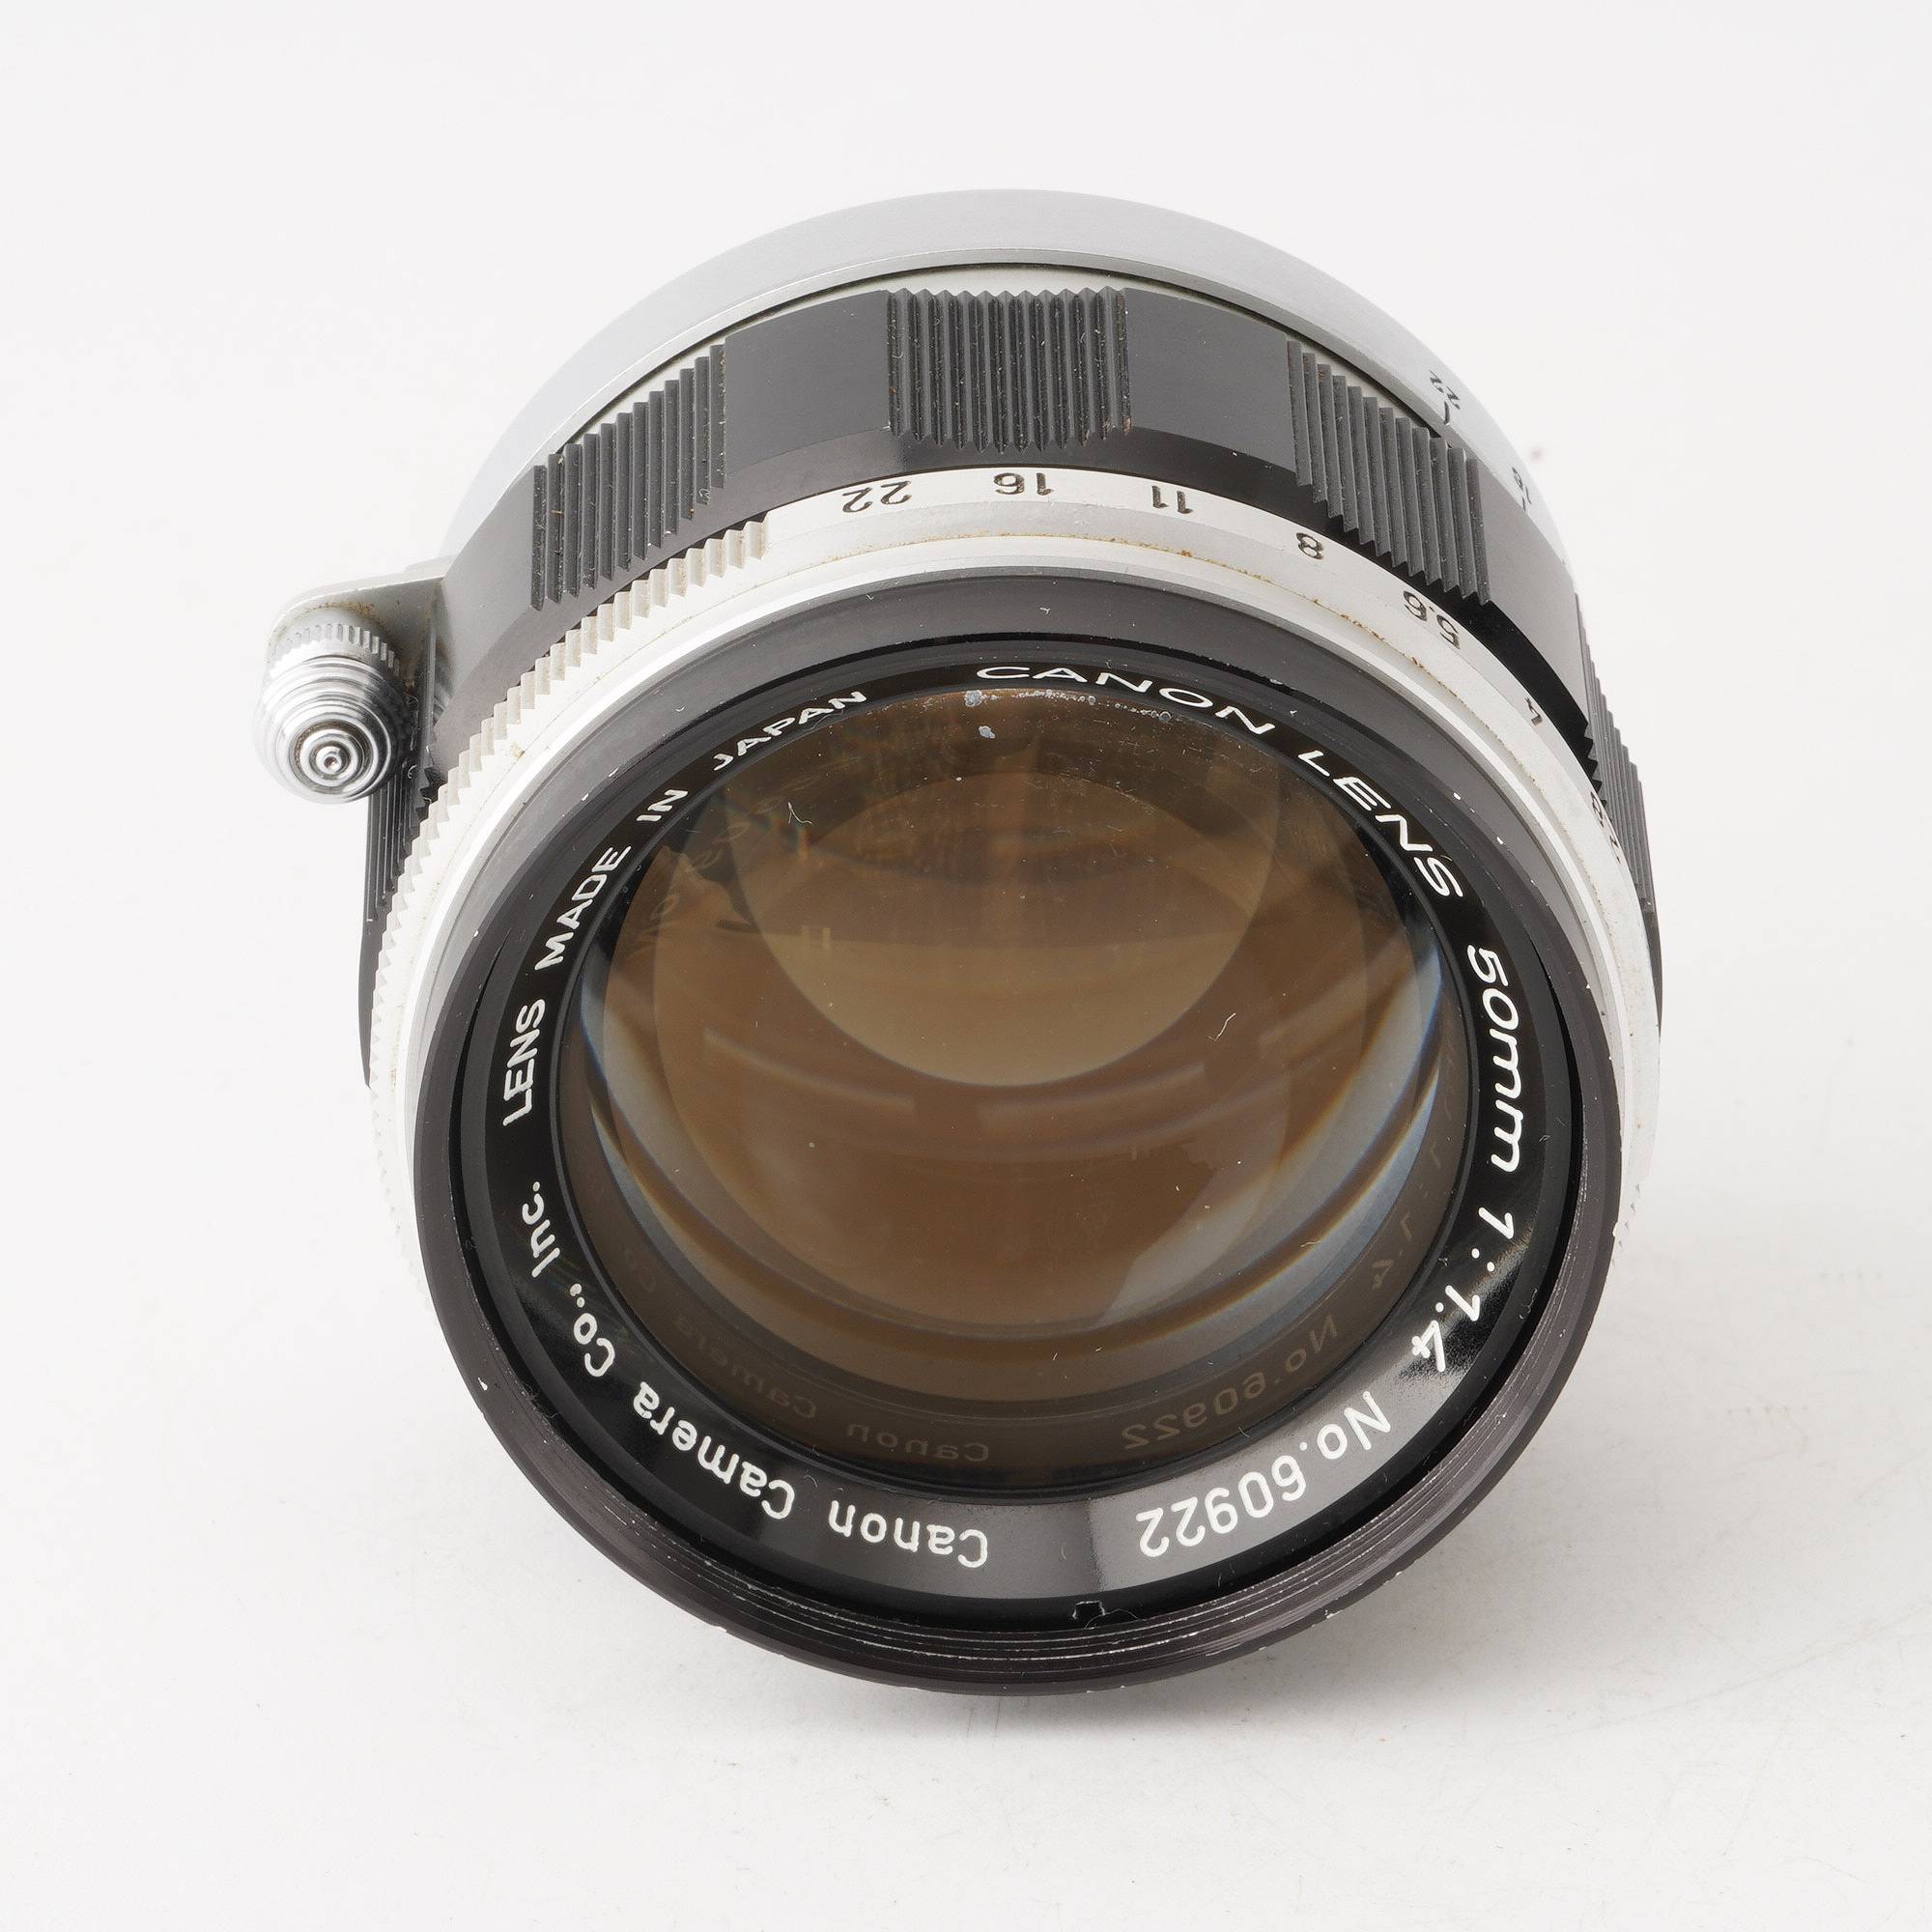 Canon 50mm f/1.4 II LTM Lens ライカL39マウント - レンズ(単焦点)